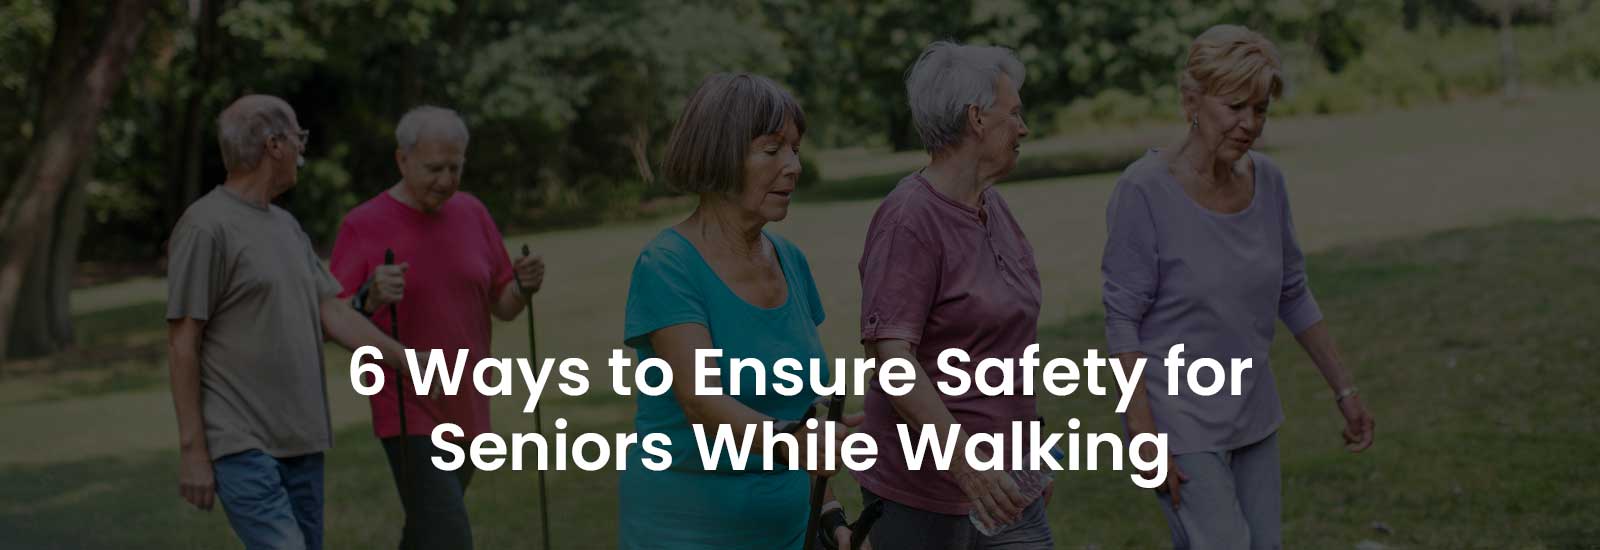 6 Ways to Ensure Safety for Seniors While Walking | Banner Image